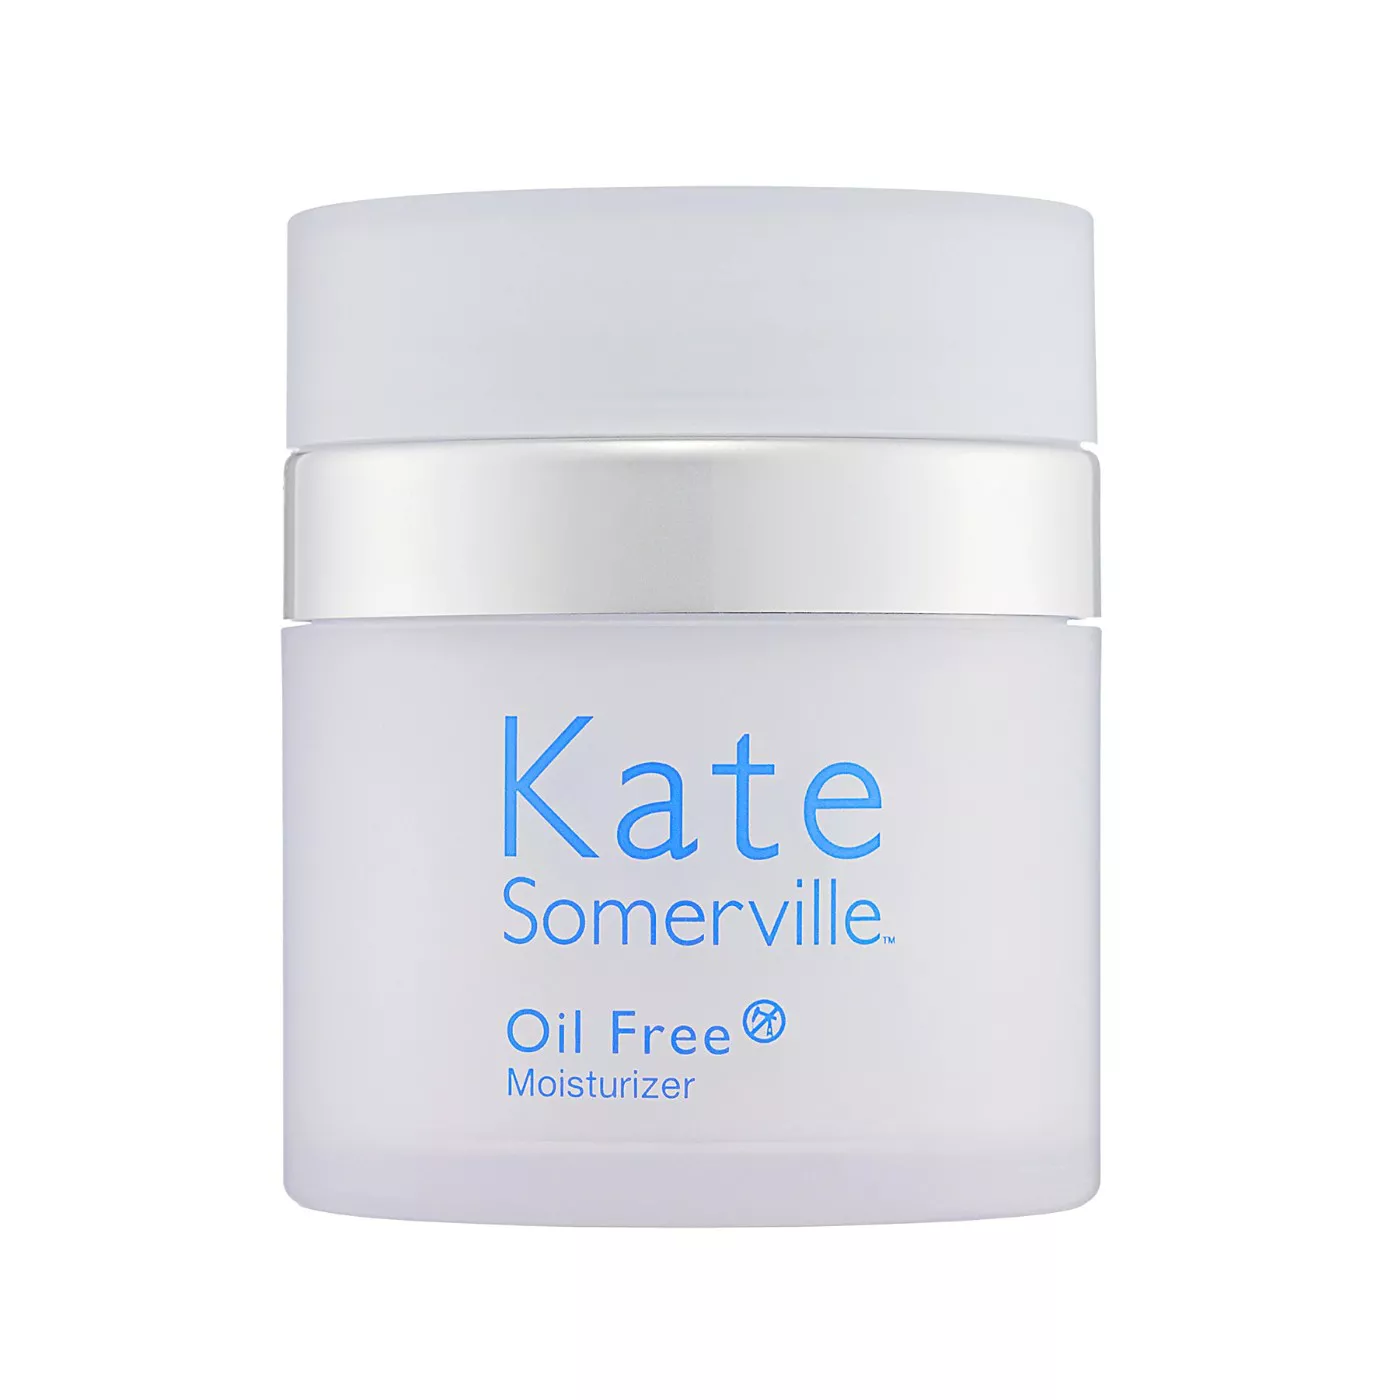 Jar of Kate Somerville Oil Free Moisturizer on a white background.